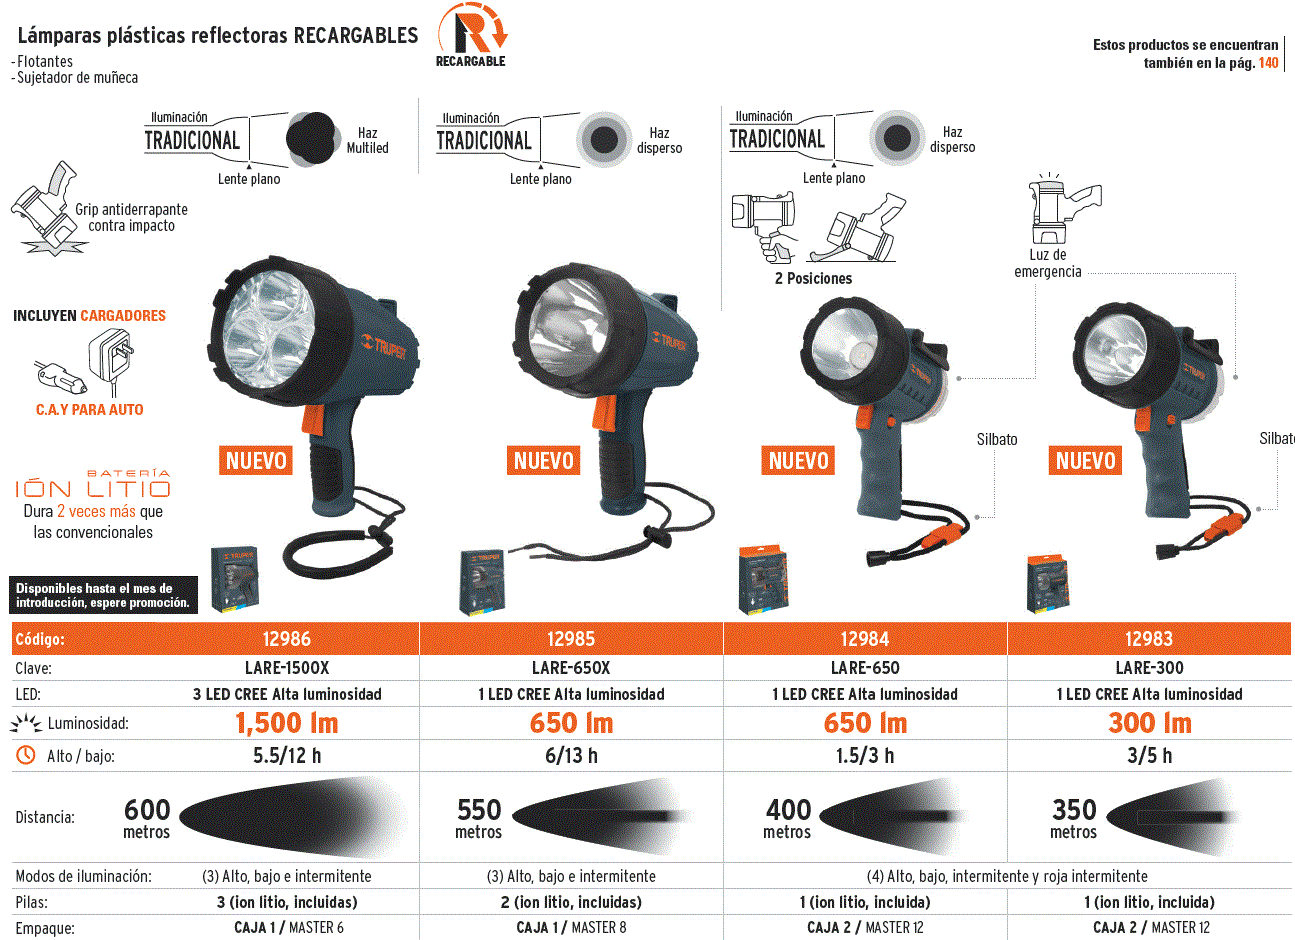 Linterna LED recargable de alta potencia 5W 1500 lum Truper LARE